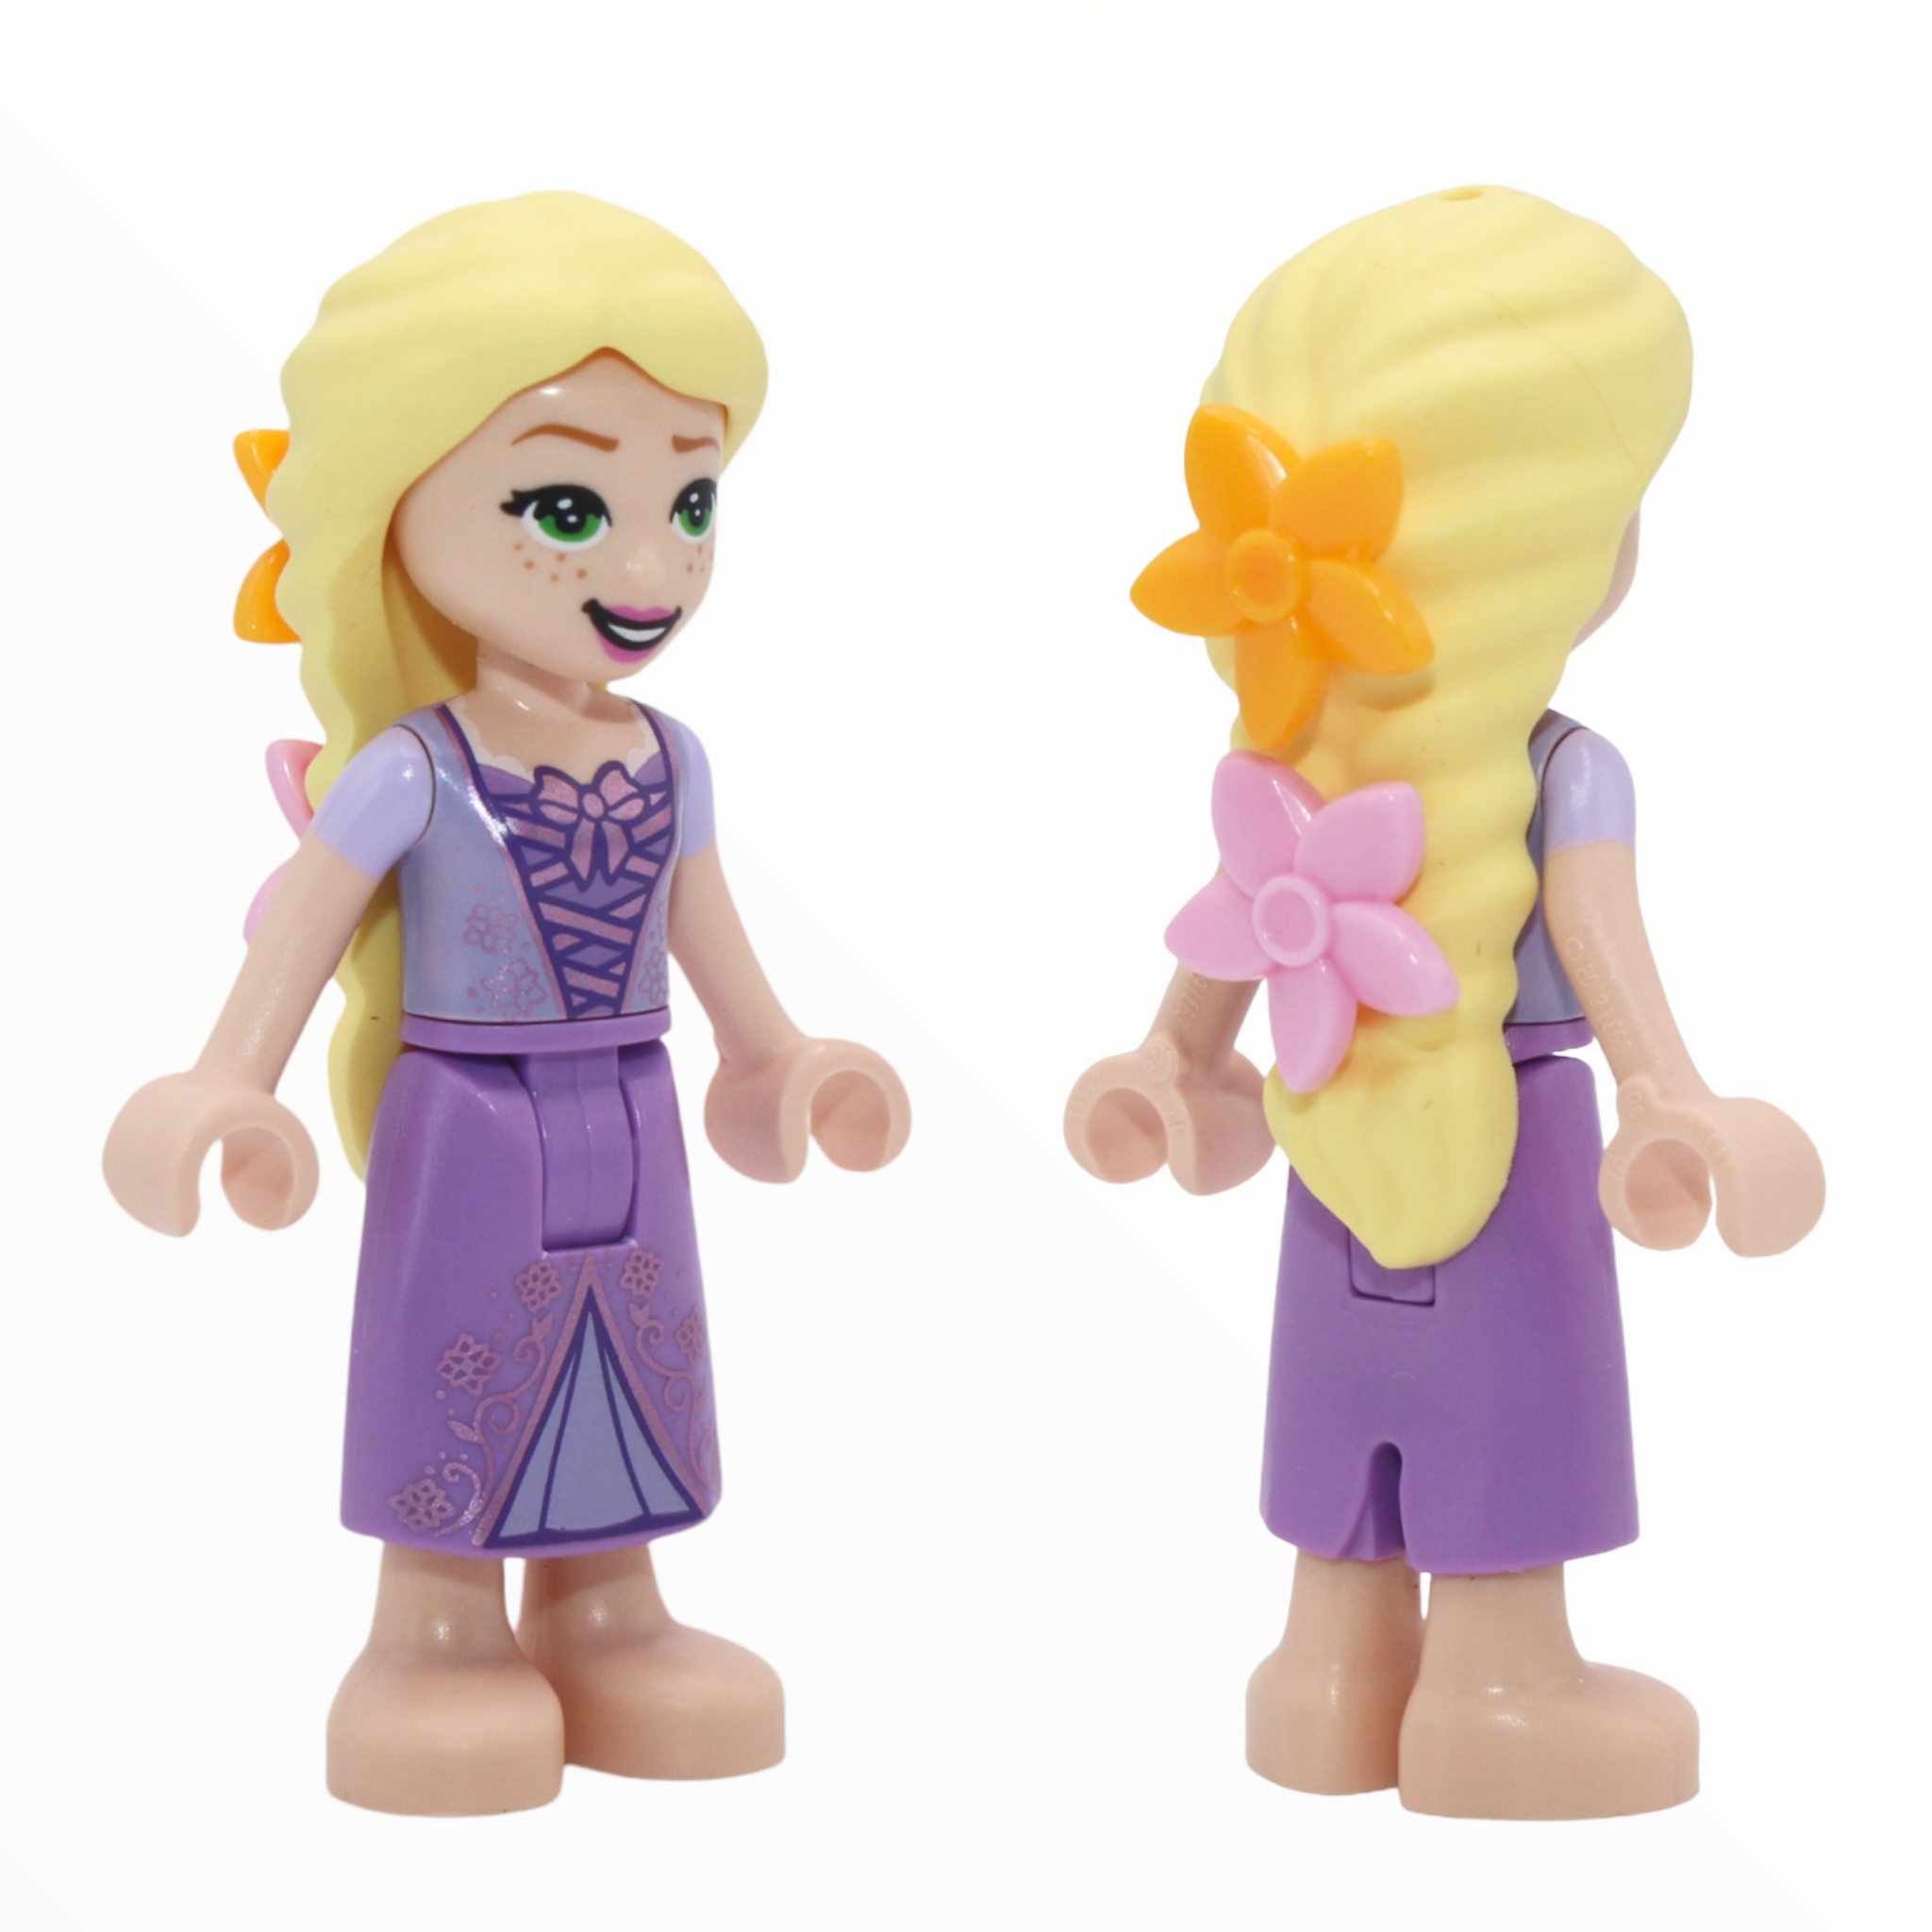 Rapunzel (two flowers in hair, 2021)